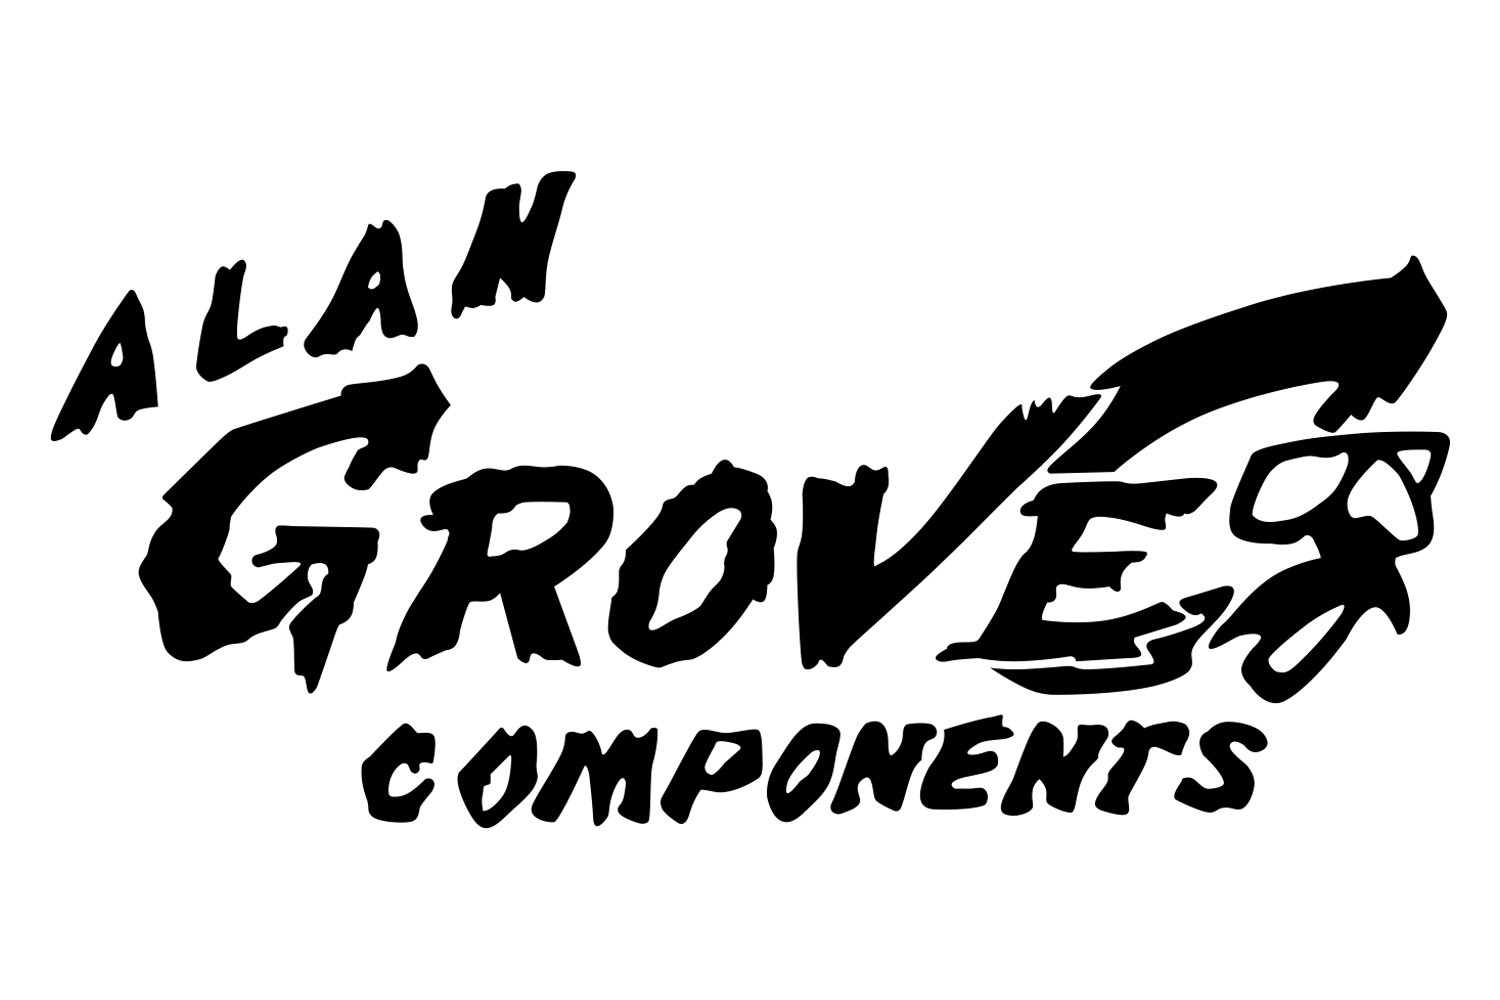 Alan Grove Components